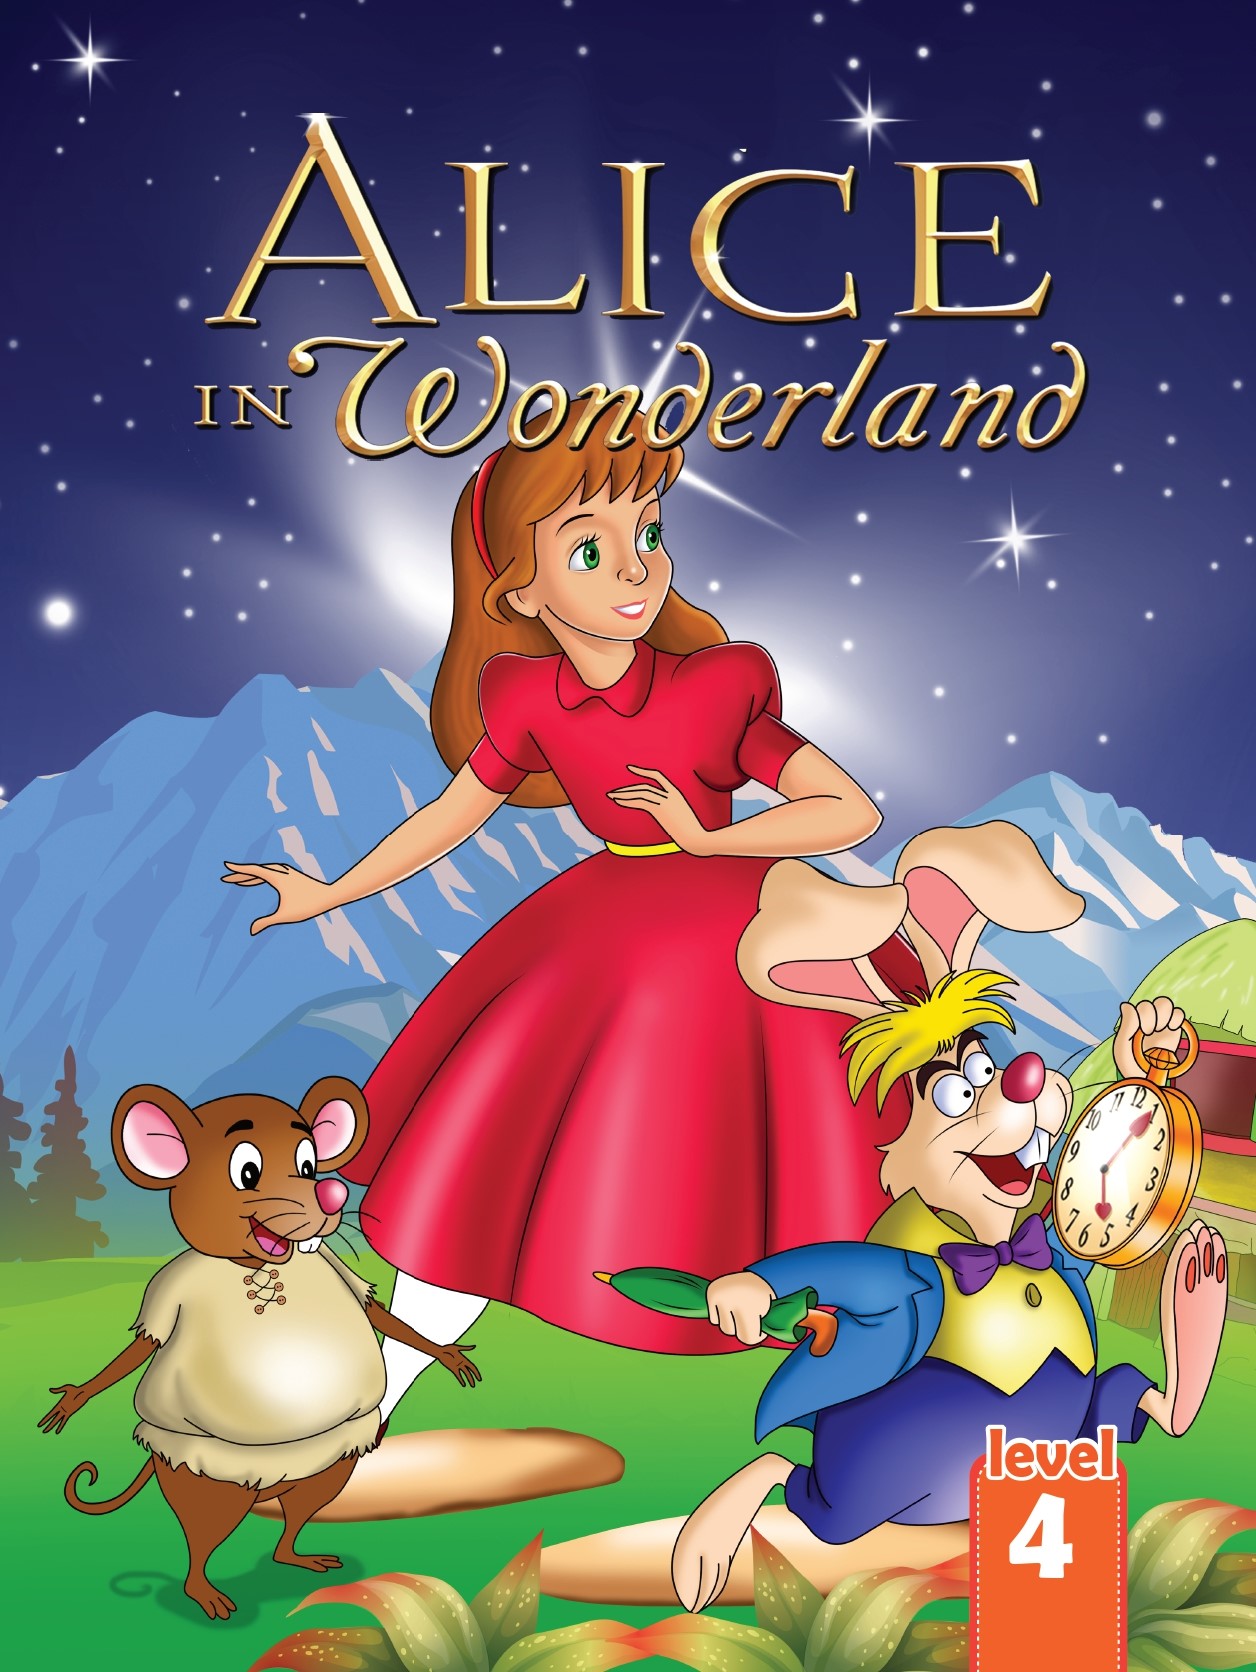 ALICE IN  Wonderland